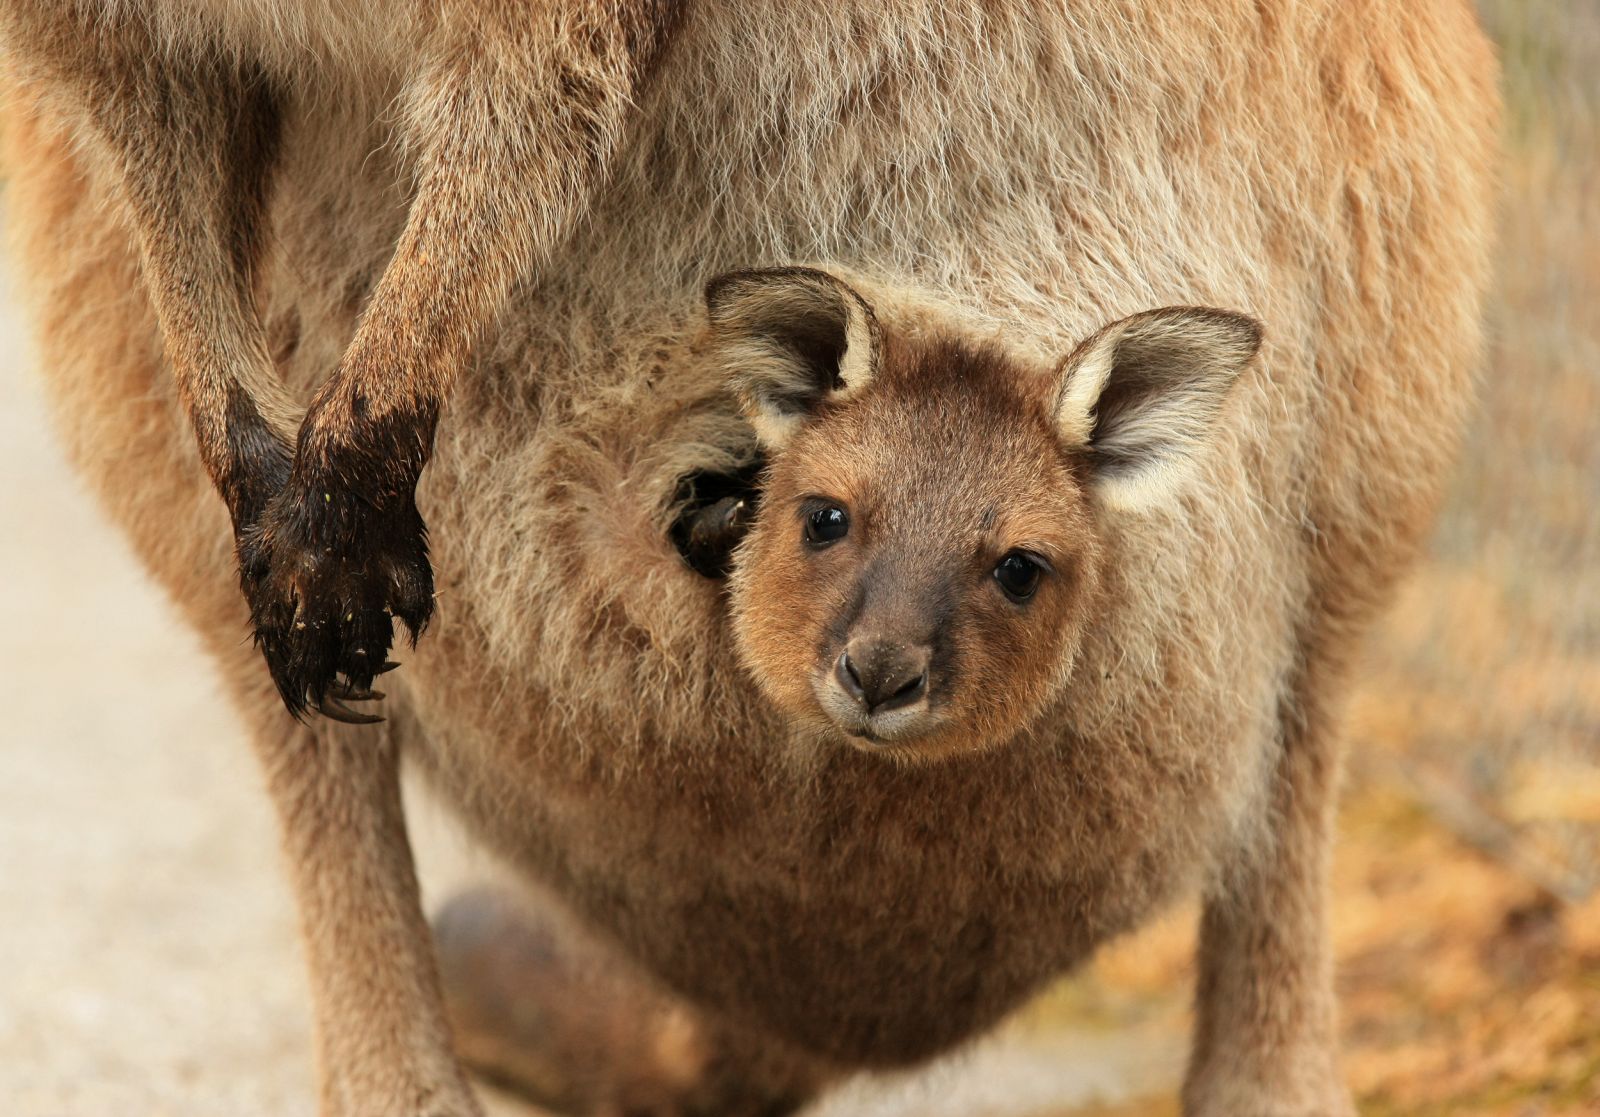 Joey in kangaroo pouch Australia